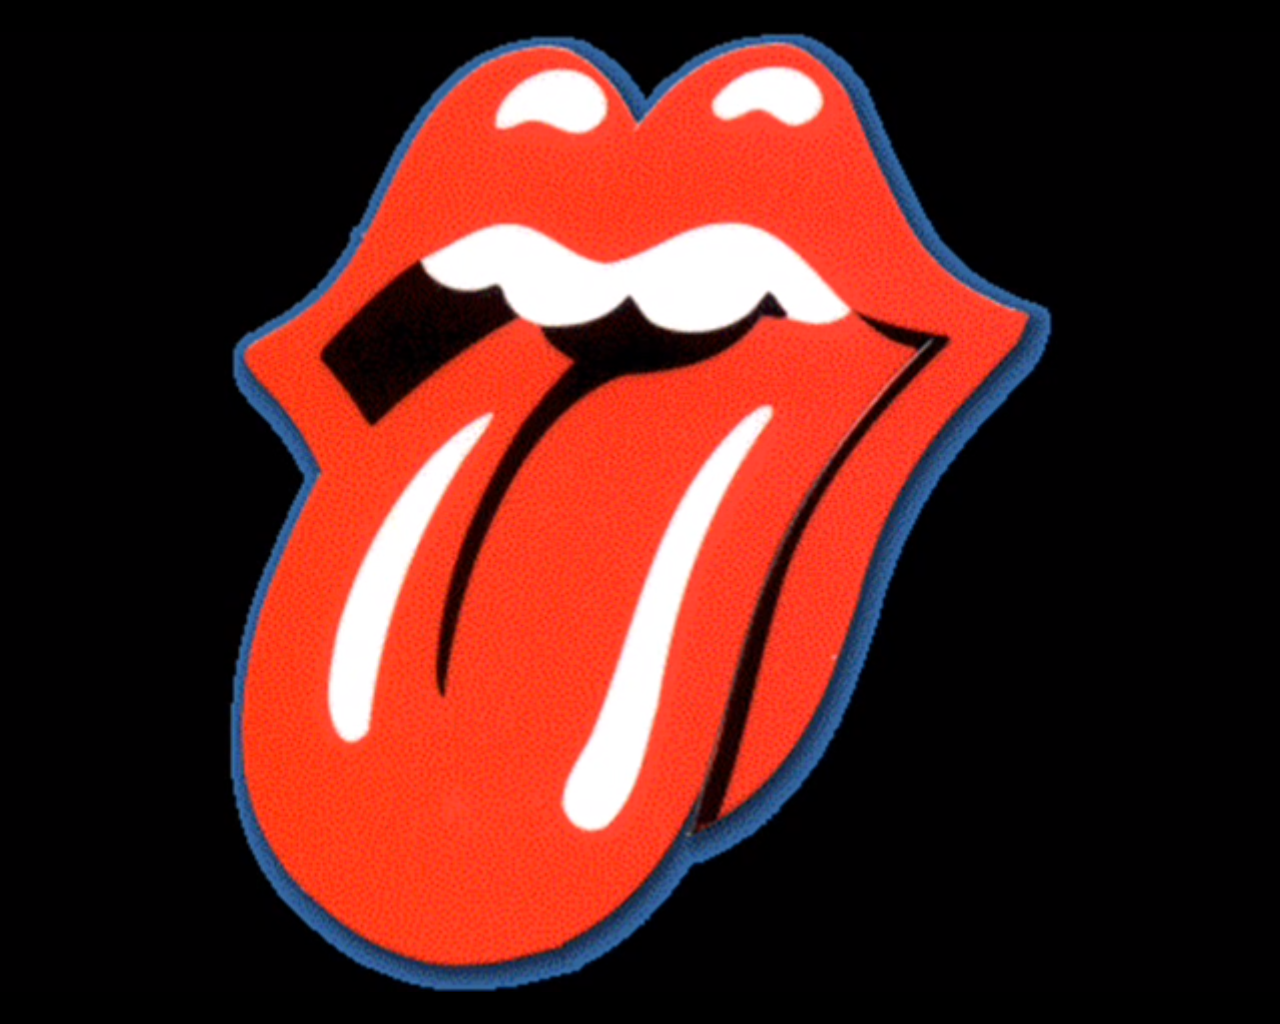 Rolling stones song stoned. Rolling Stones логотип. Стоп для Роллинг стоунз. Роллинг стоунз арт. Sticky fingers the Rolling Stones.